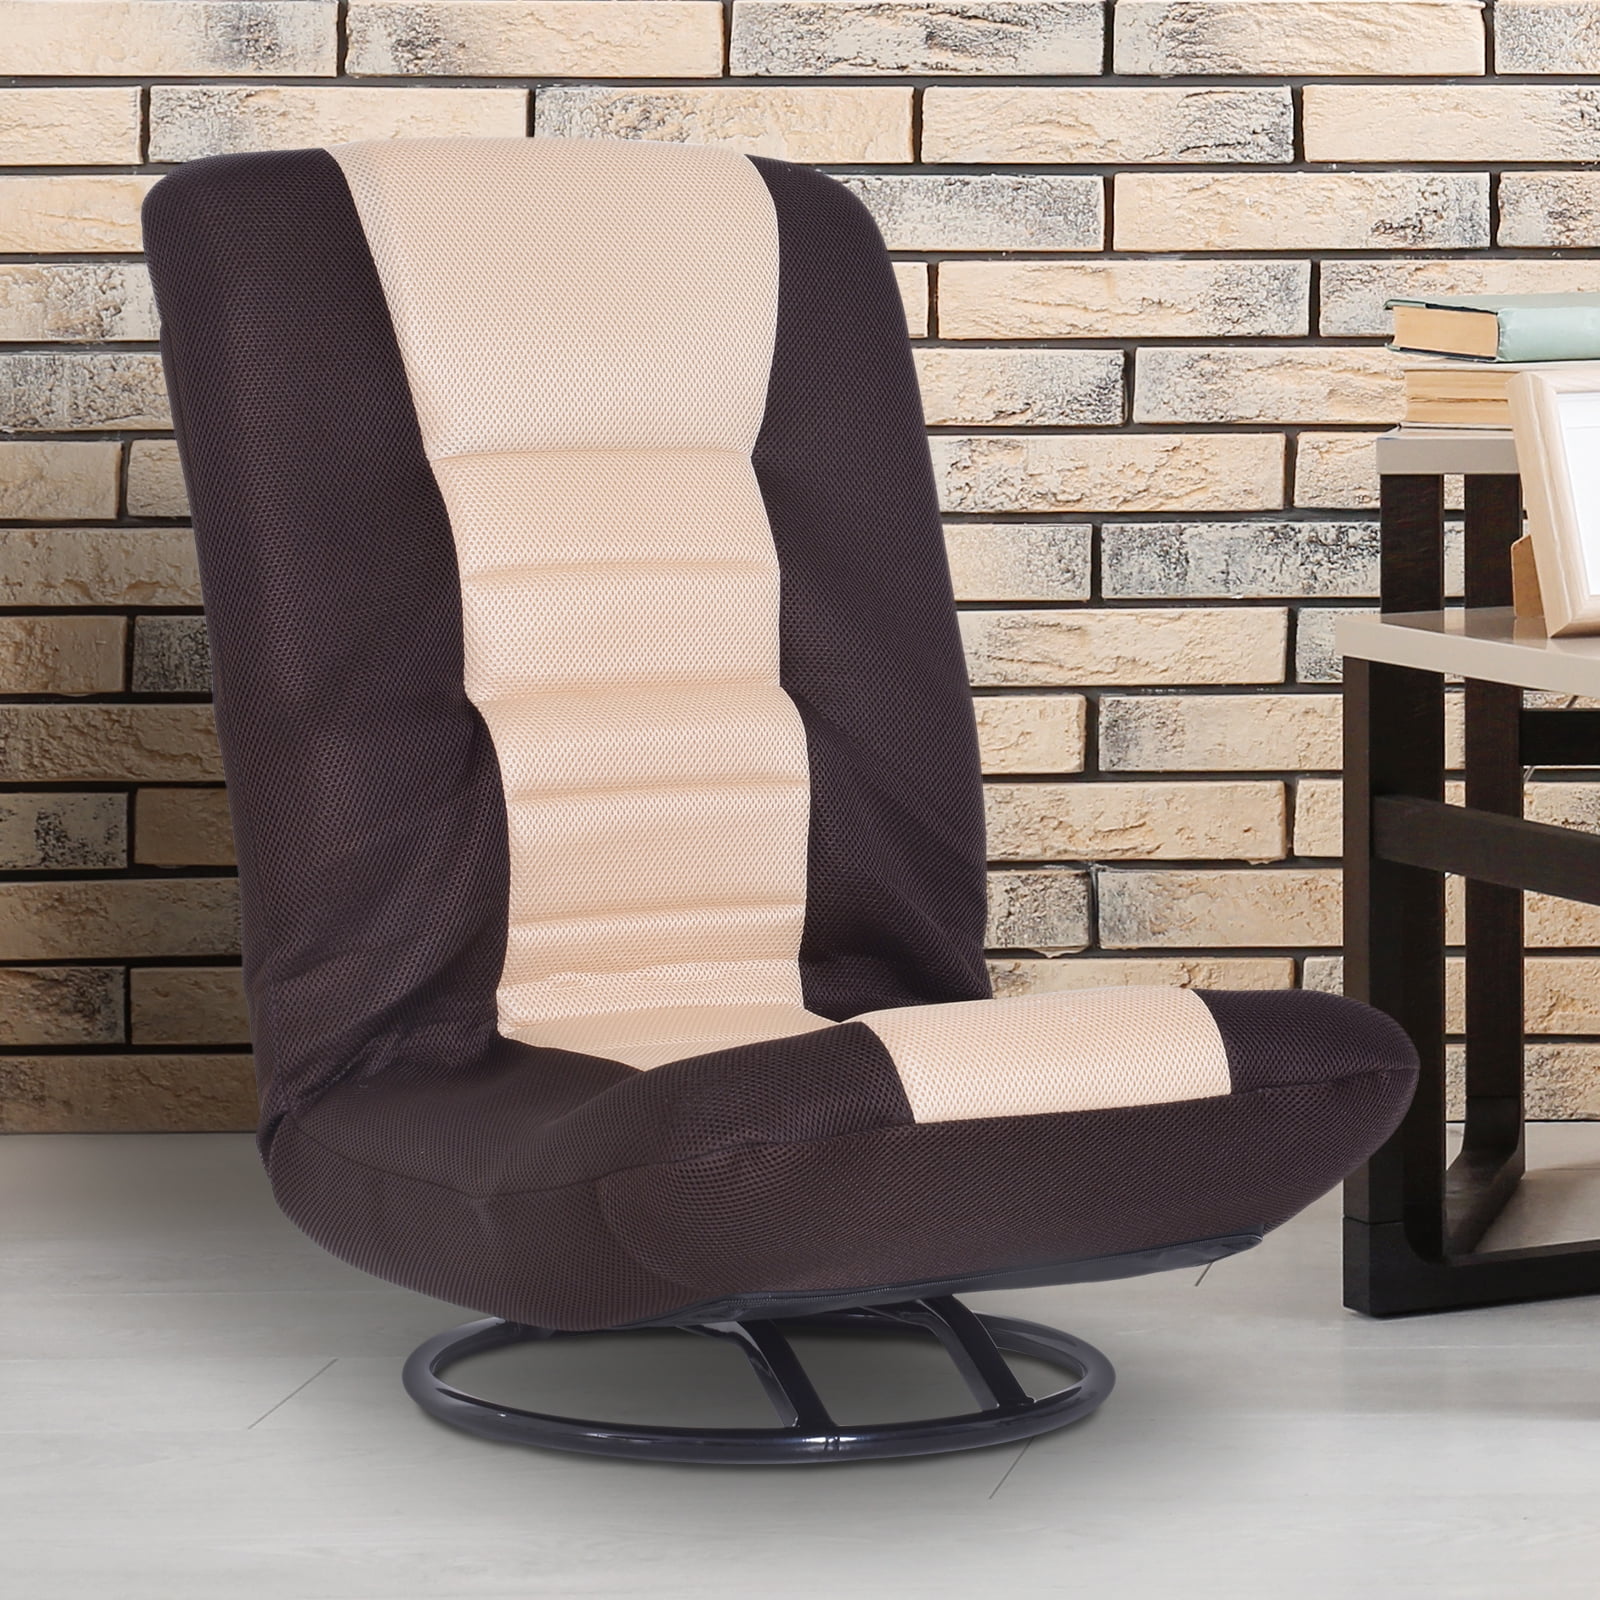 360 Degree Swivel Game Video Floor Chair 5 Position Adjustable